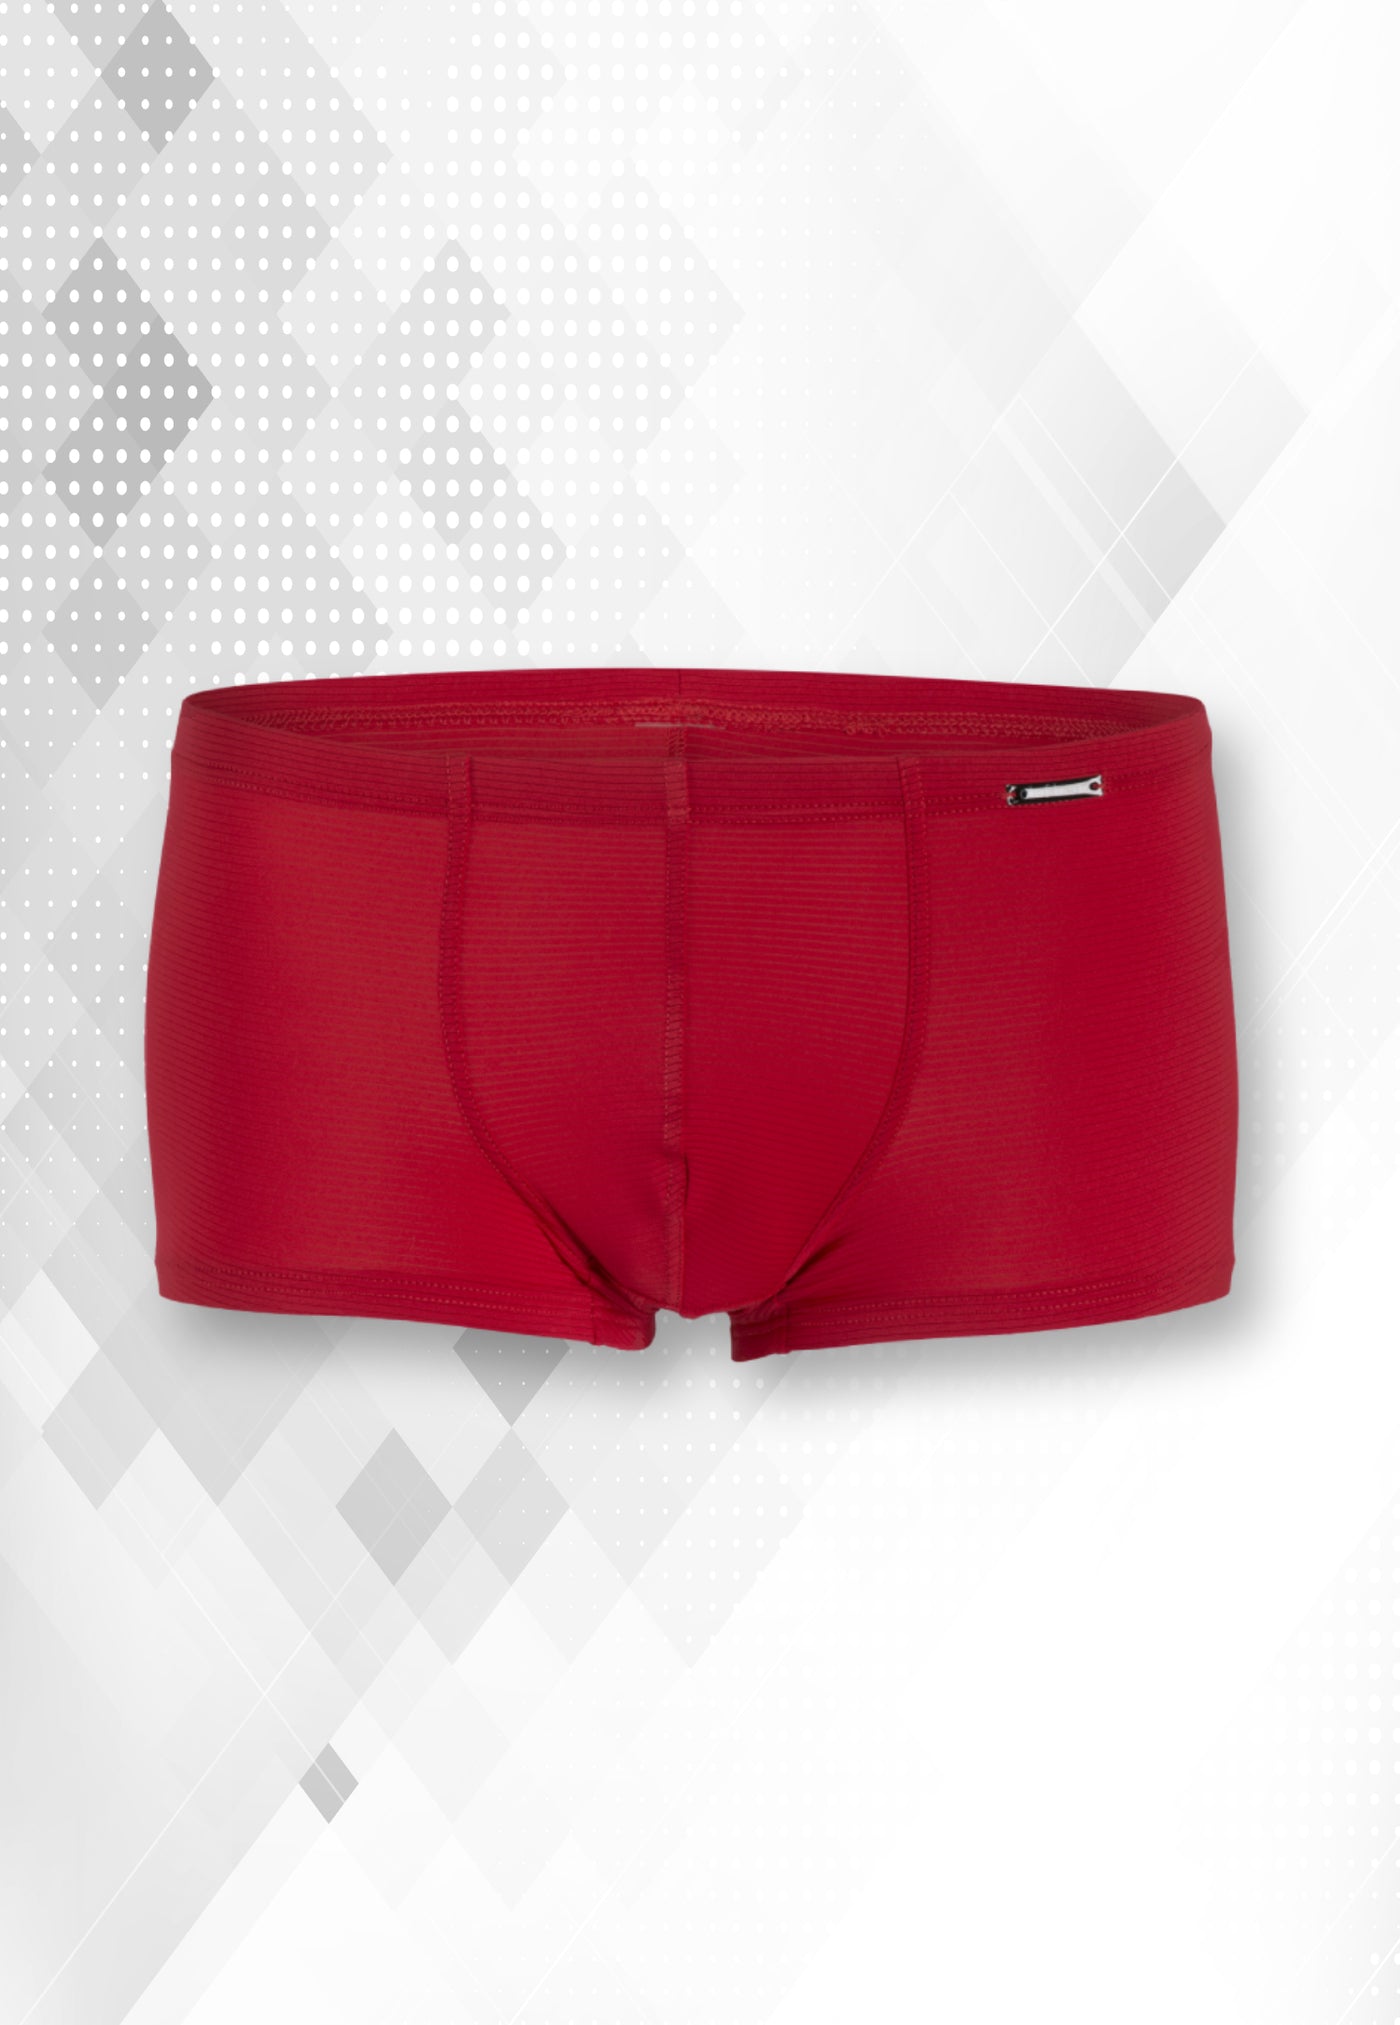 Olaf Benz - RED 1201 - Horizontal Fine Stripe -  Minipants